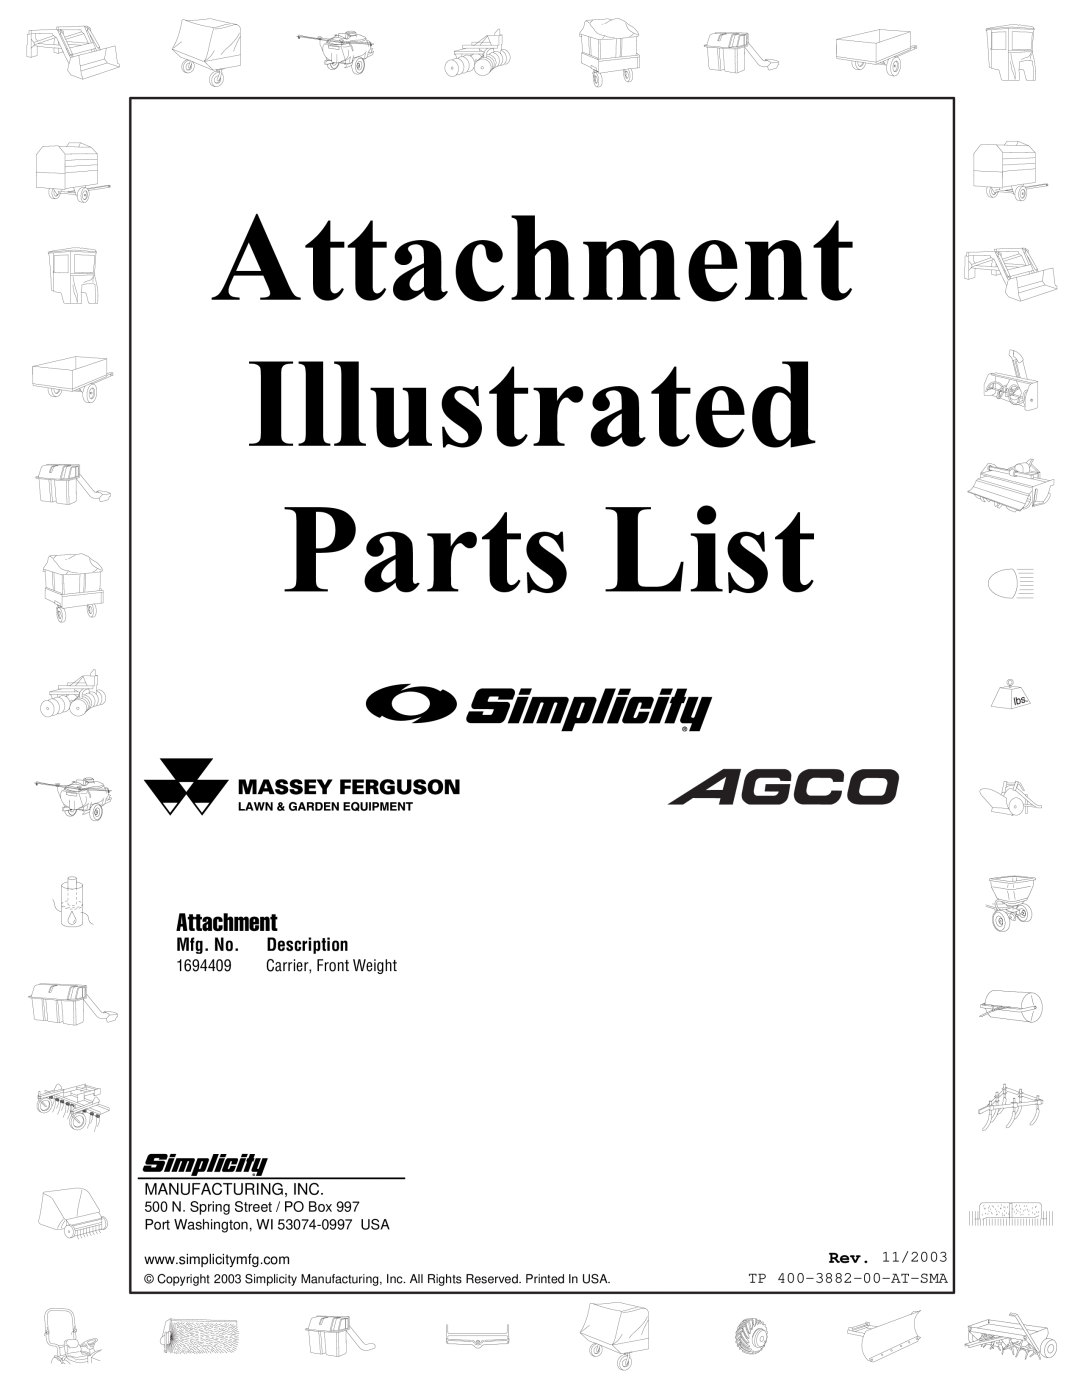 Snapper manual Mfg. No. Description, Rev. 11/2003, TP 400-3882-00-AT-SMA, Attachment Illustrated Parts List 